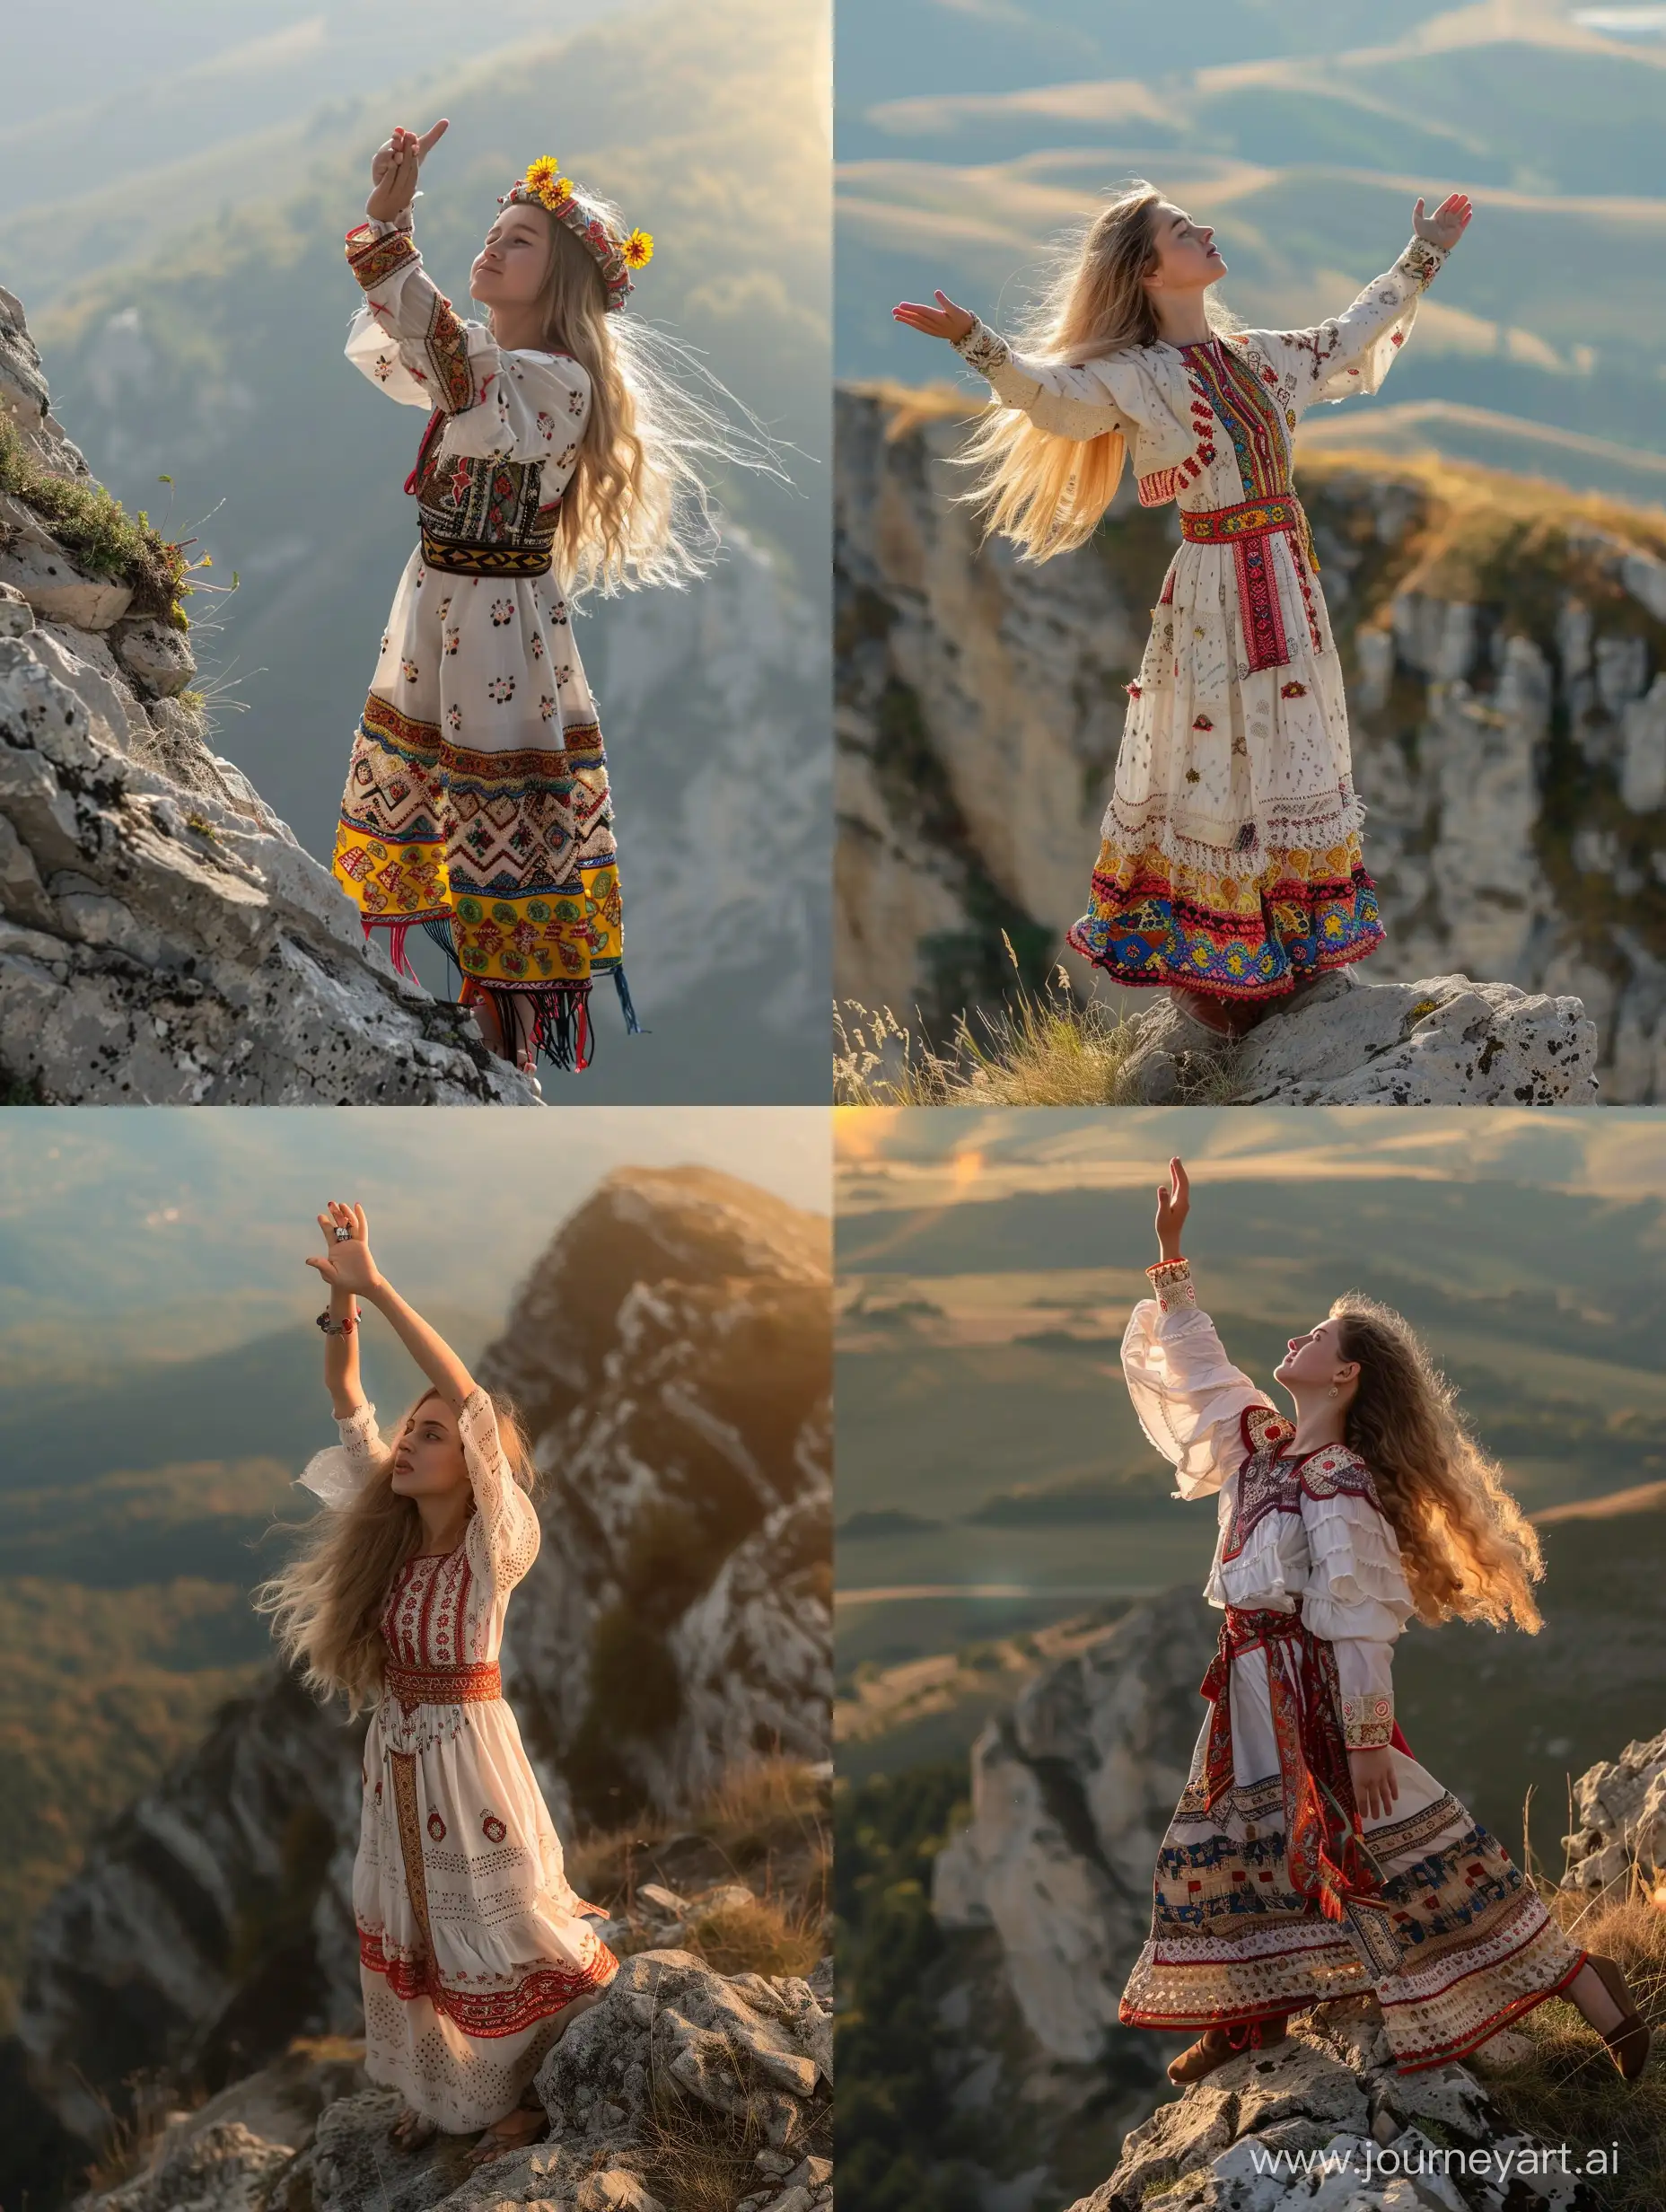 Moldovan-Girl-Embracing-Sunlight-on-Mountain-Peak-in-Traditional-Costume